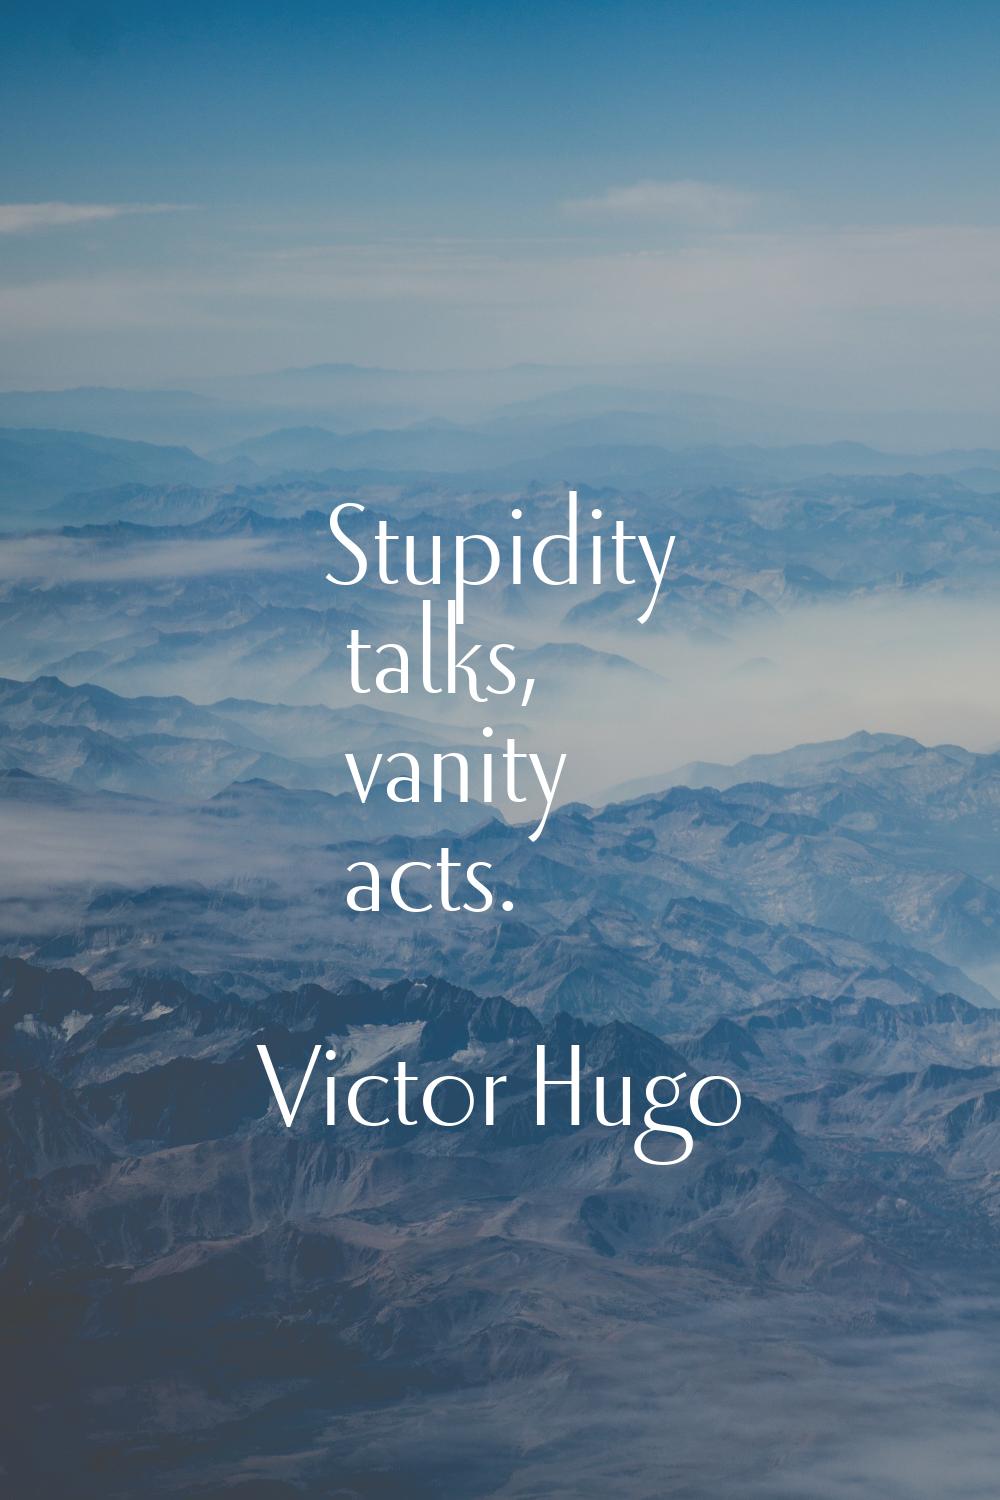 Stupidity talks, vanity acts.